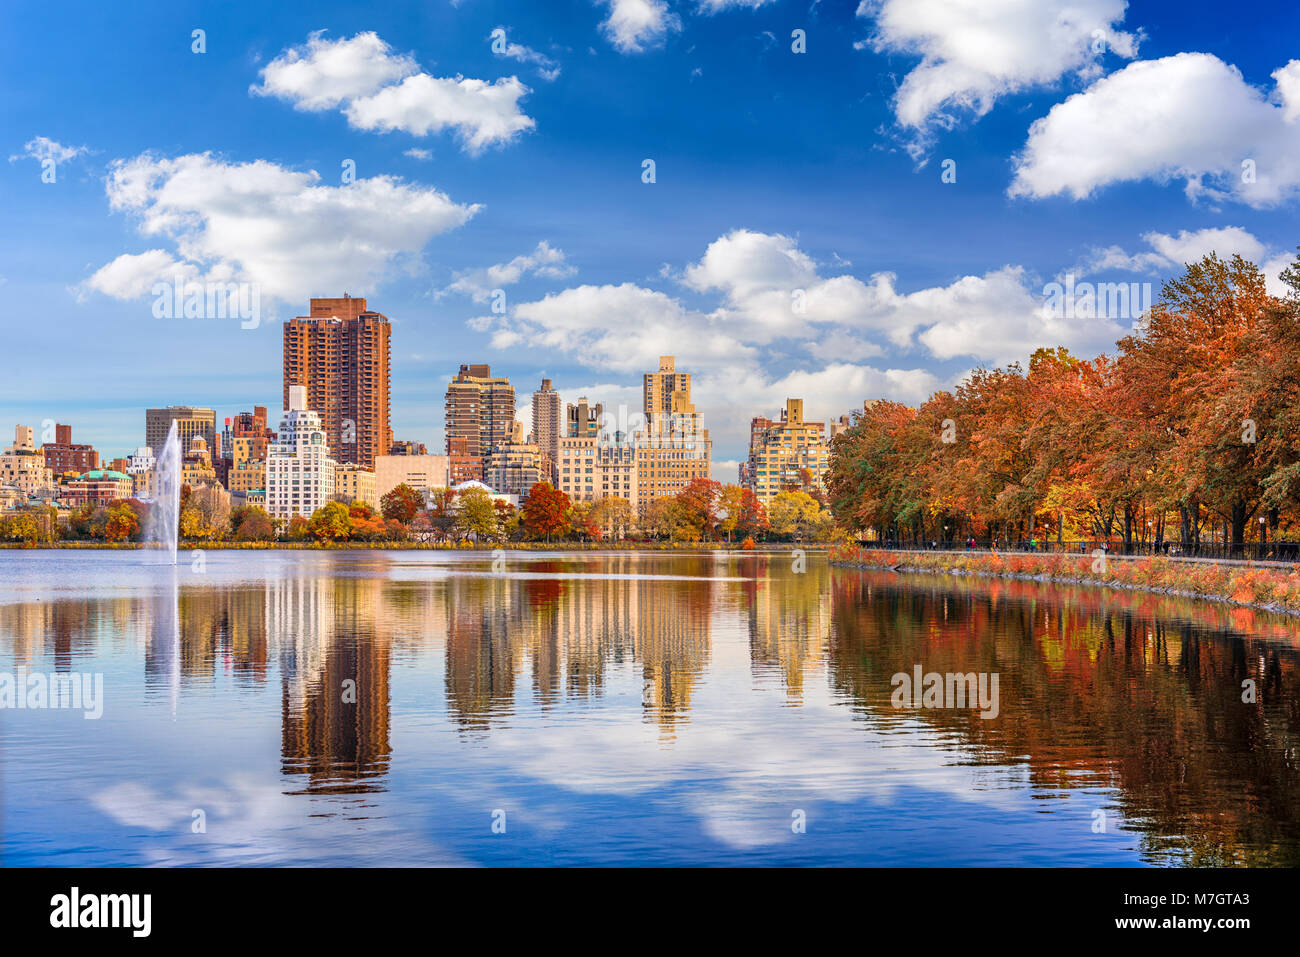 New York, New York am Central Park im Herbst Saison. Stockfoto